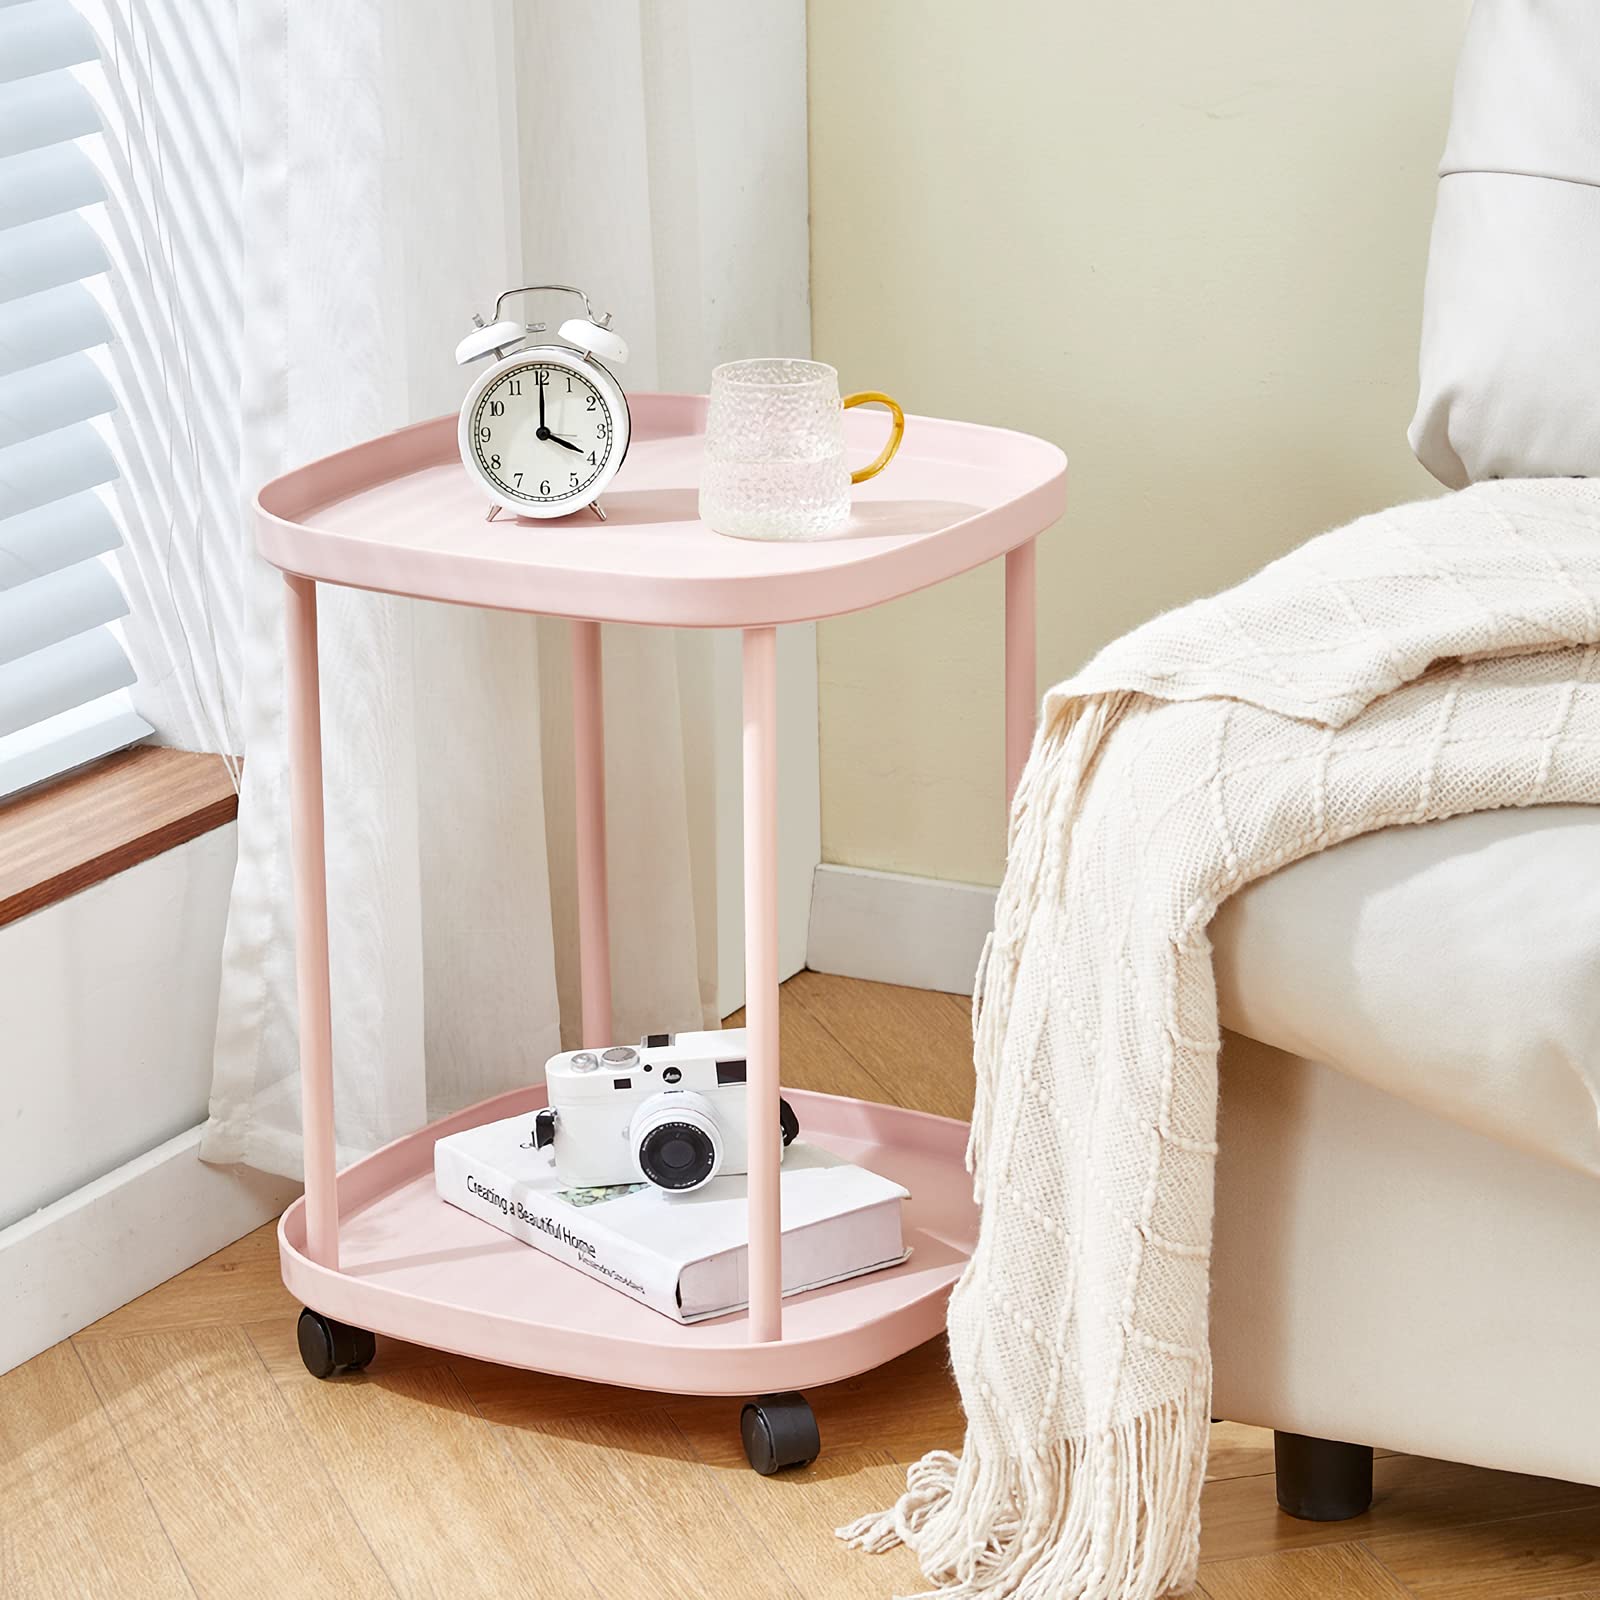 PEFEK サイドテーブル ベッドサイドテーブル 2段 キャスター付き ナイトテーブル ソファーテーブル コーヒーテーブル 幅43×奥行43×高さ53cm 組み立て簡単 移動可能 収納 棚付き (Pink ピンク)